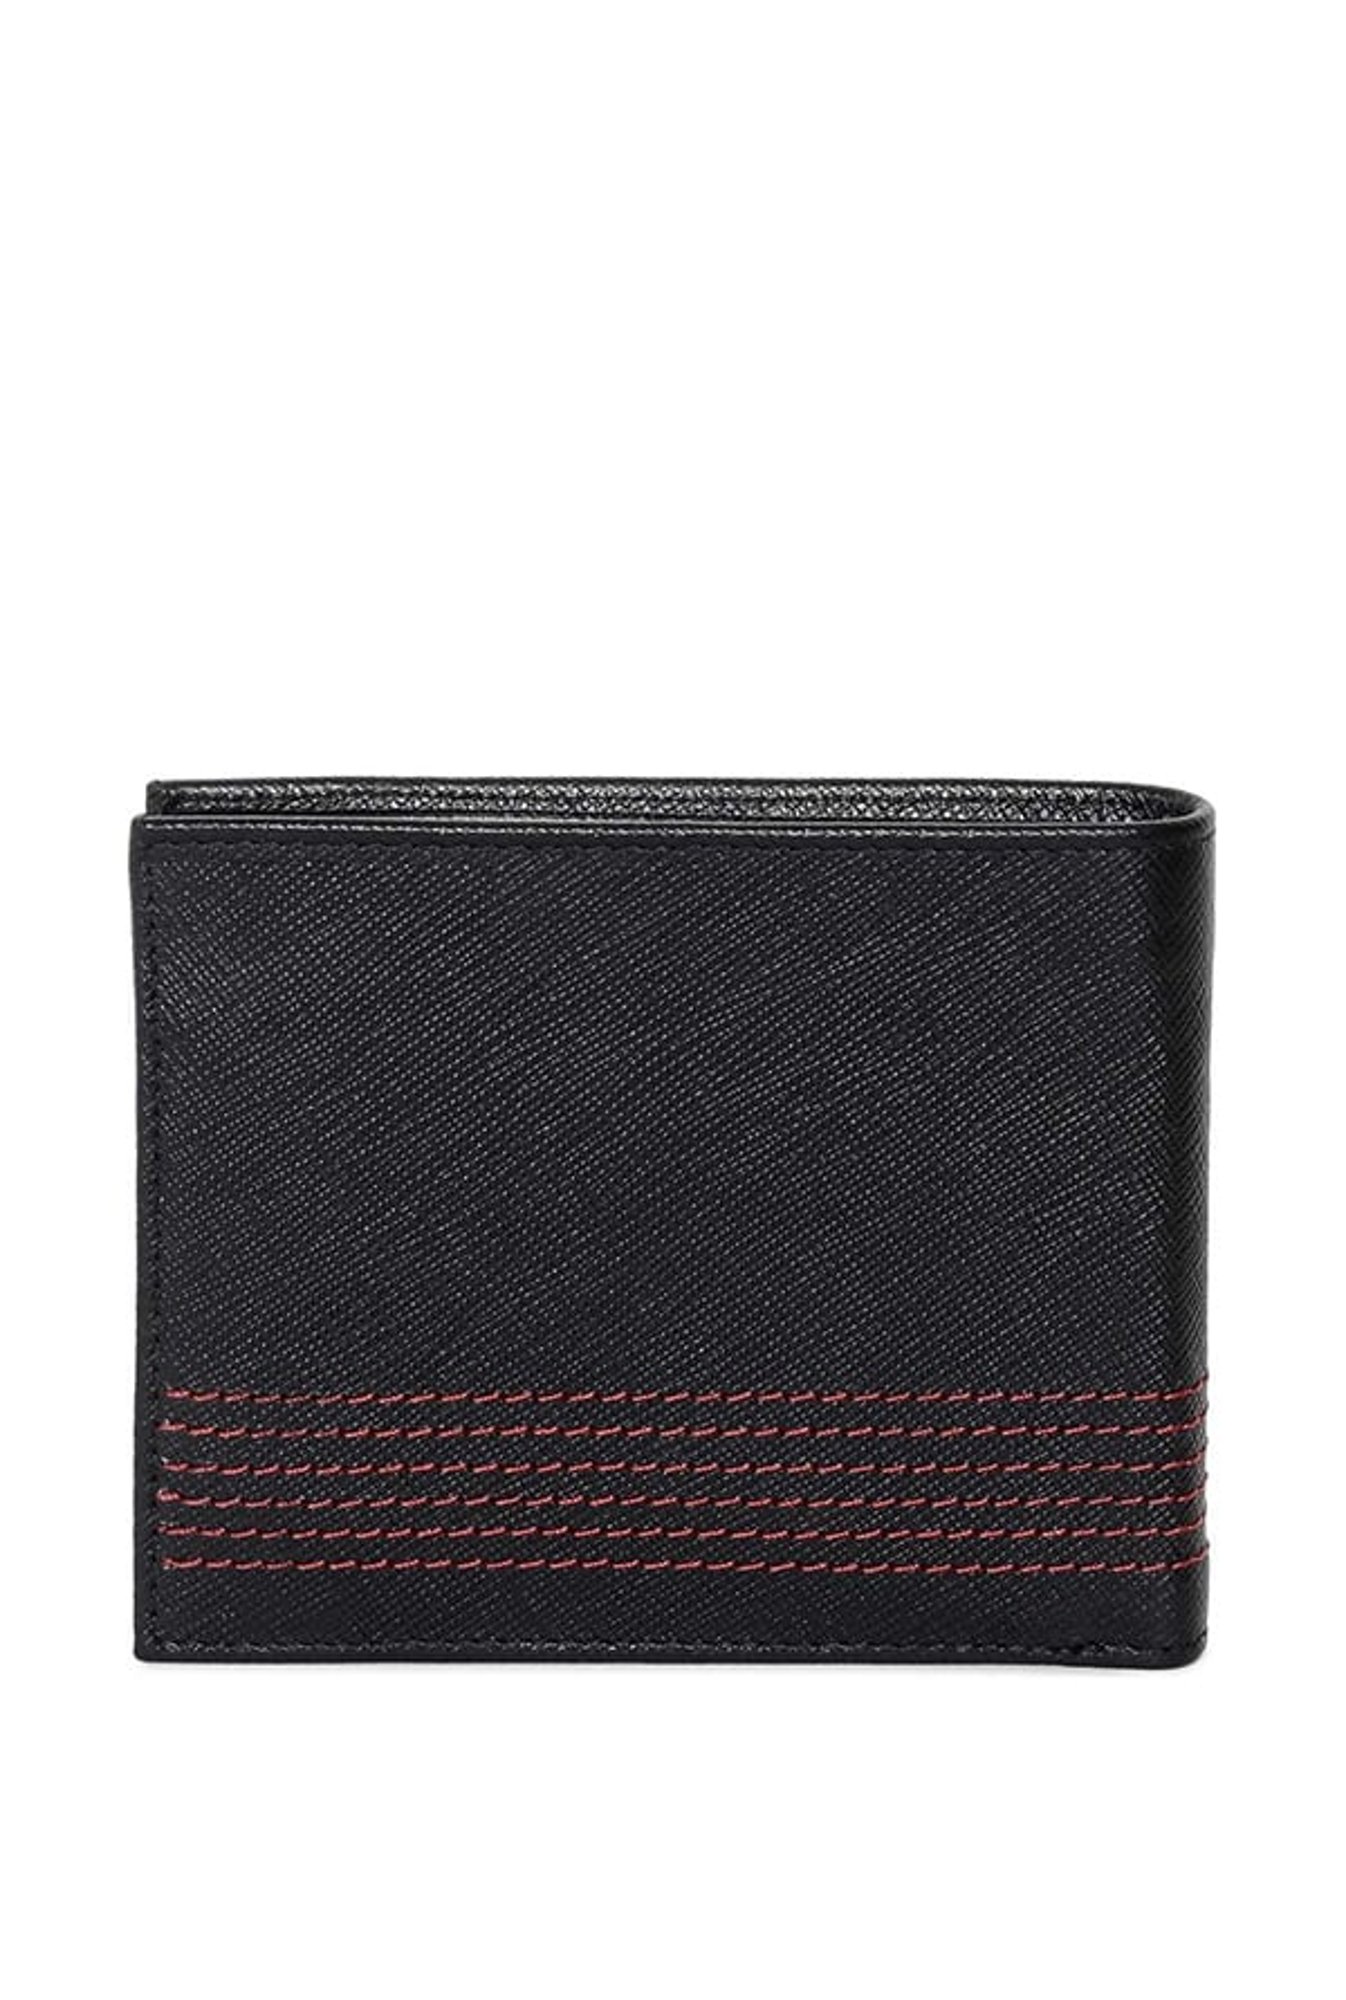 Tan Leather & denim Bifold Wallet - Titan Corporate Gifting